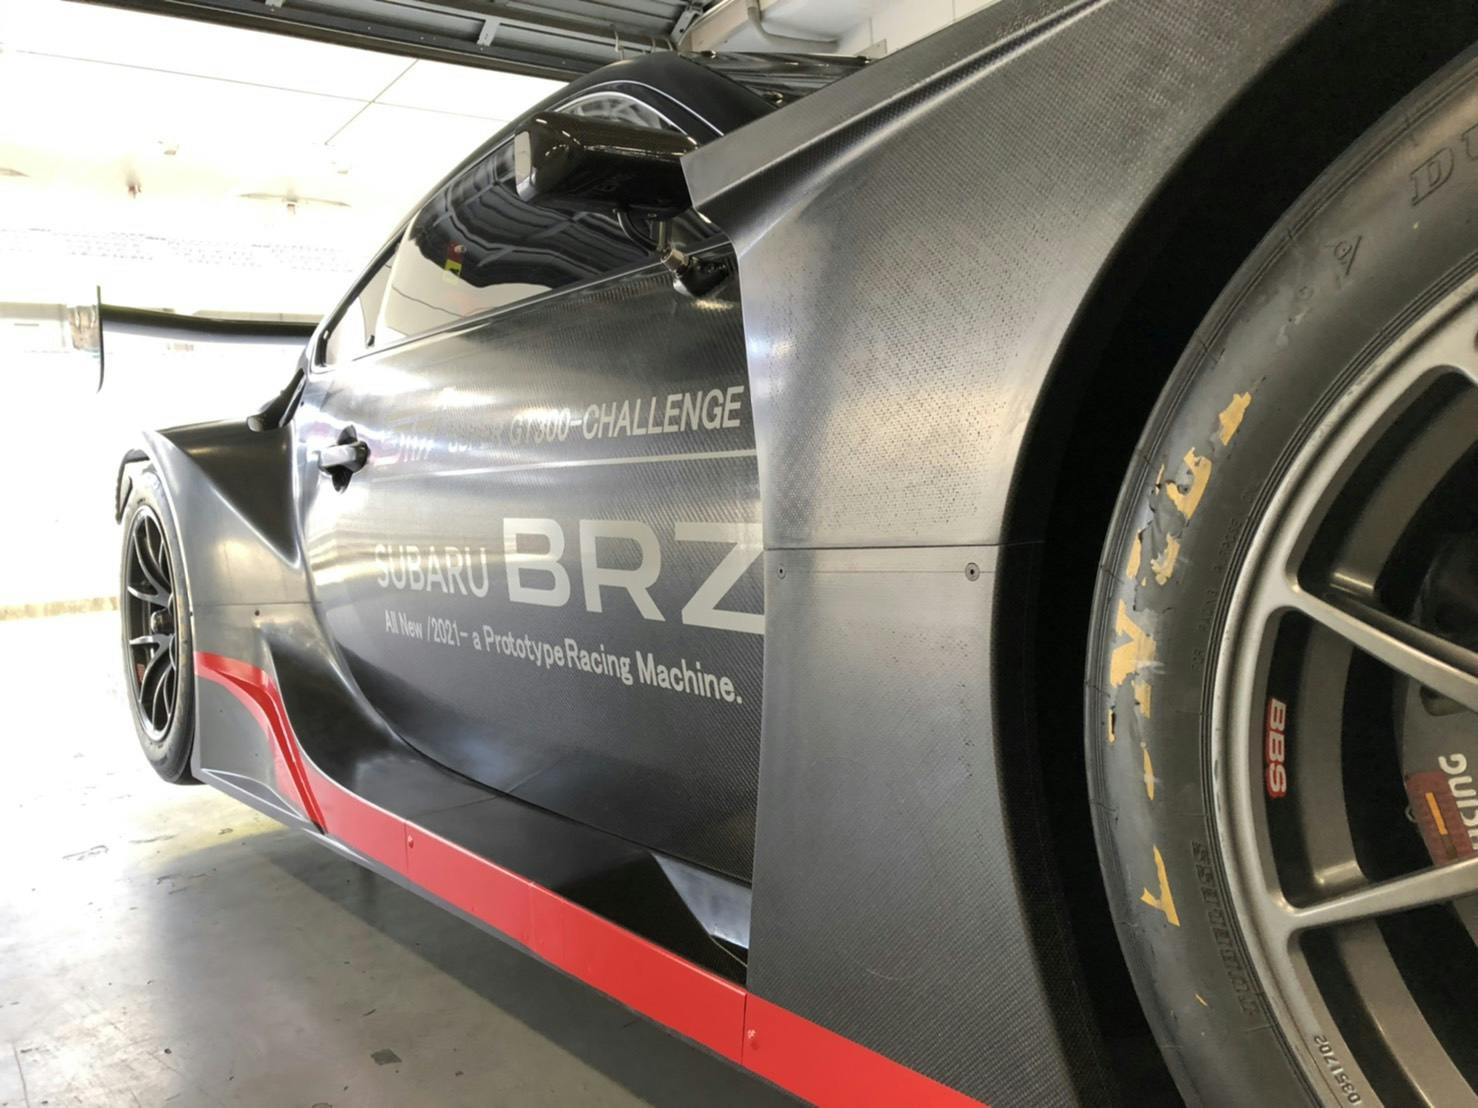 2021 Subaru BRZ GT300 side